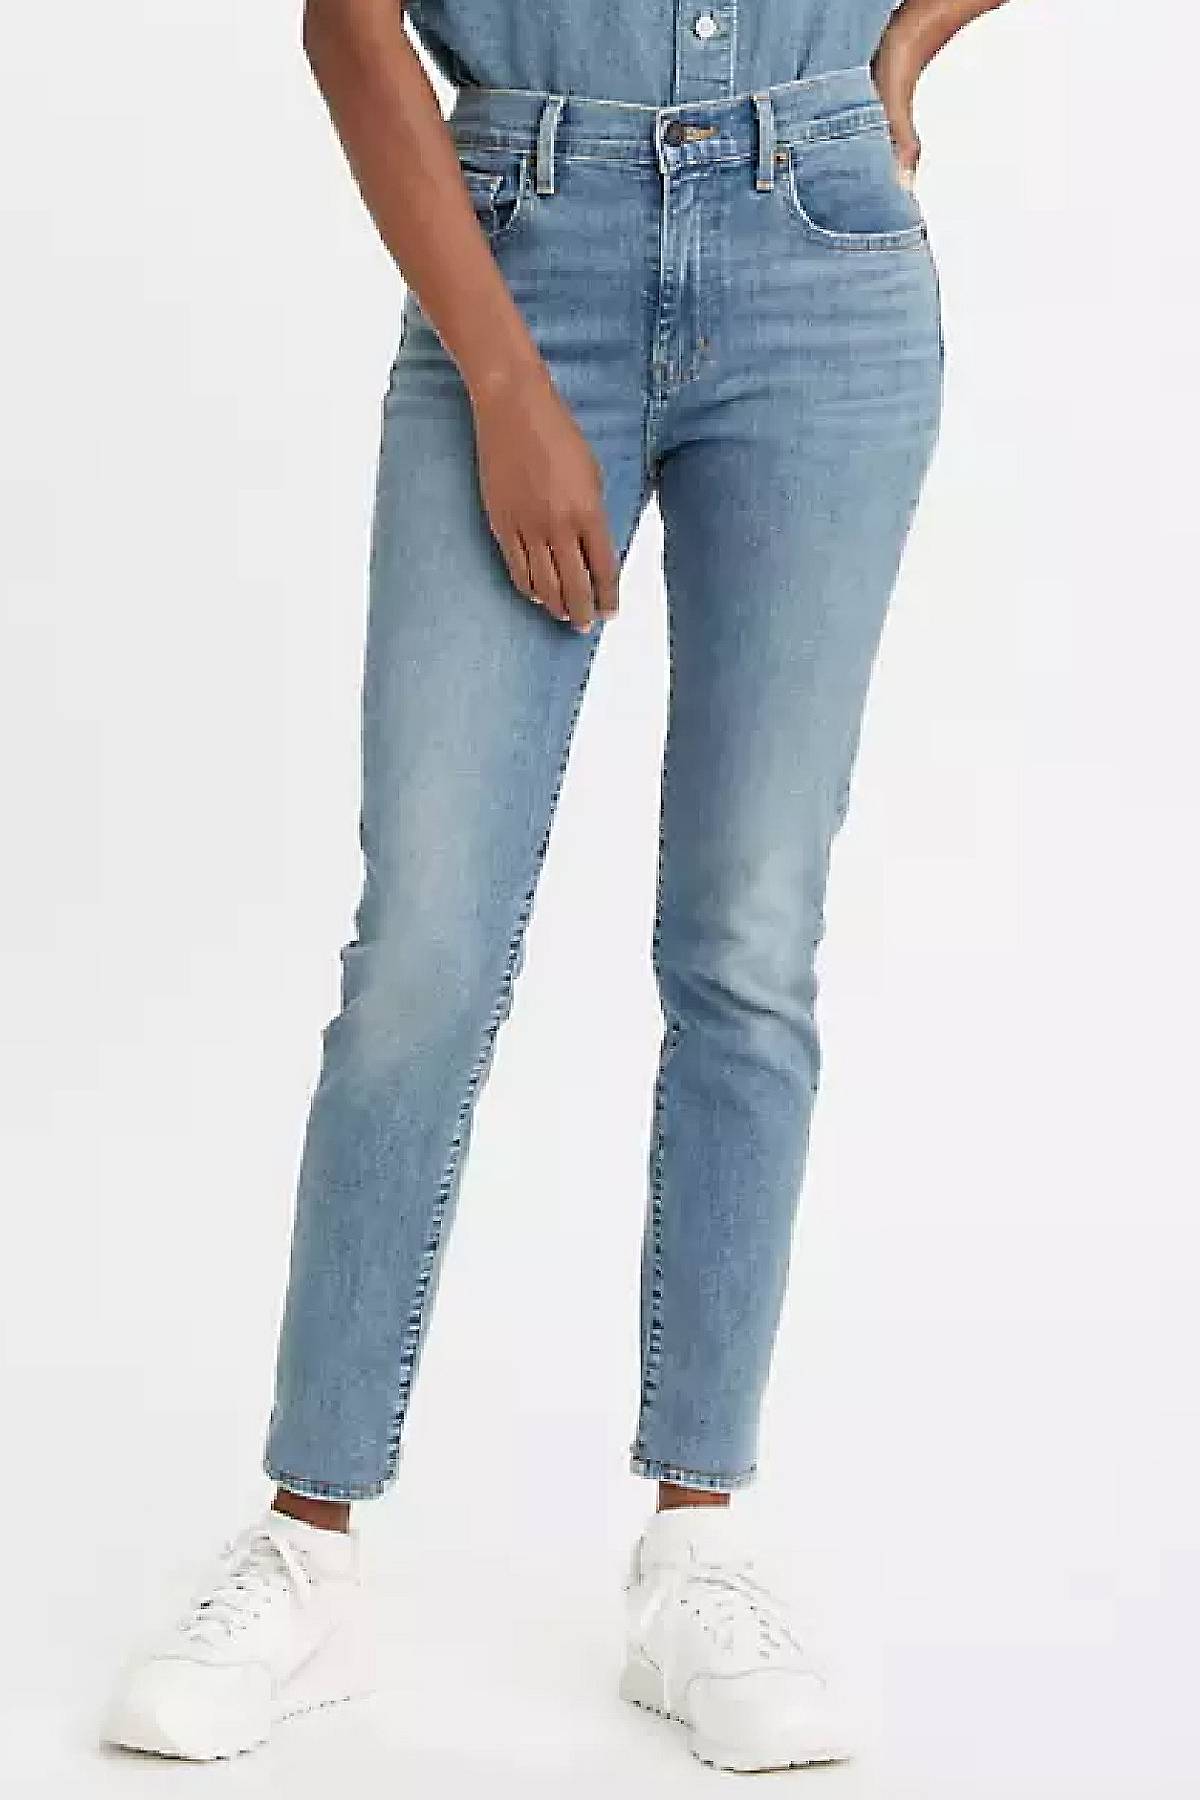 Model wearing 721 high-rise skinny jeans